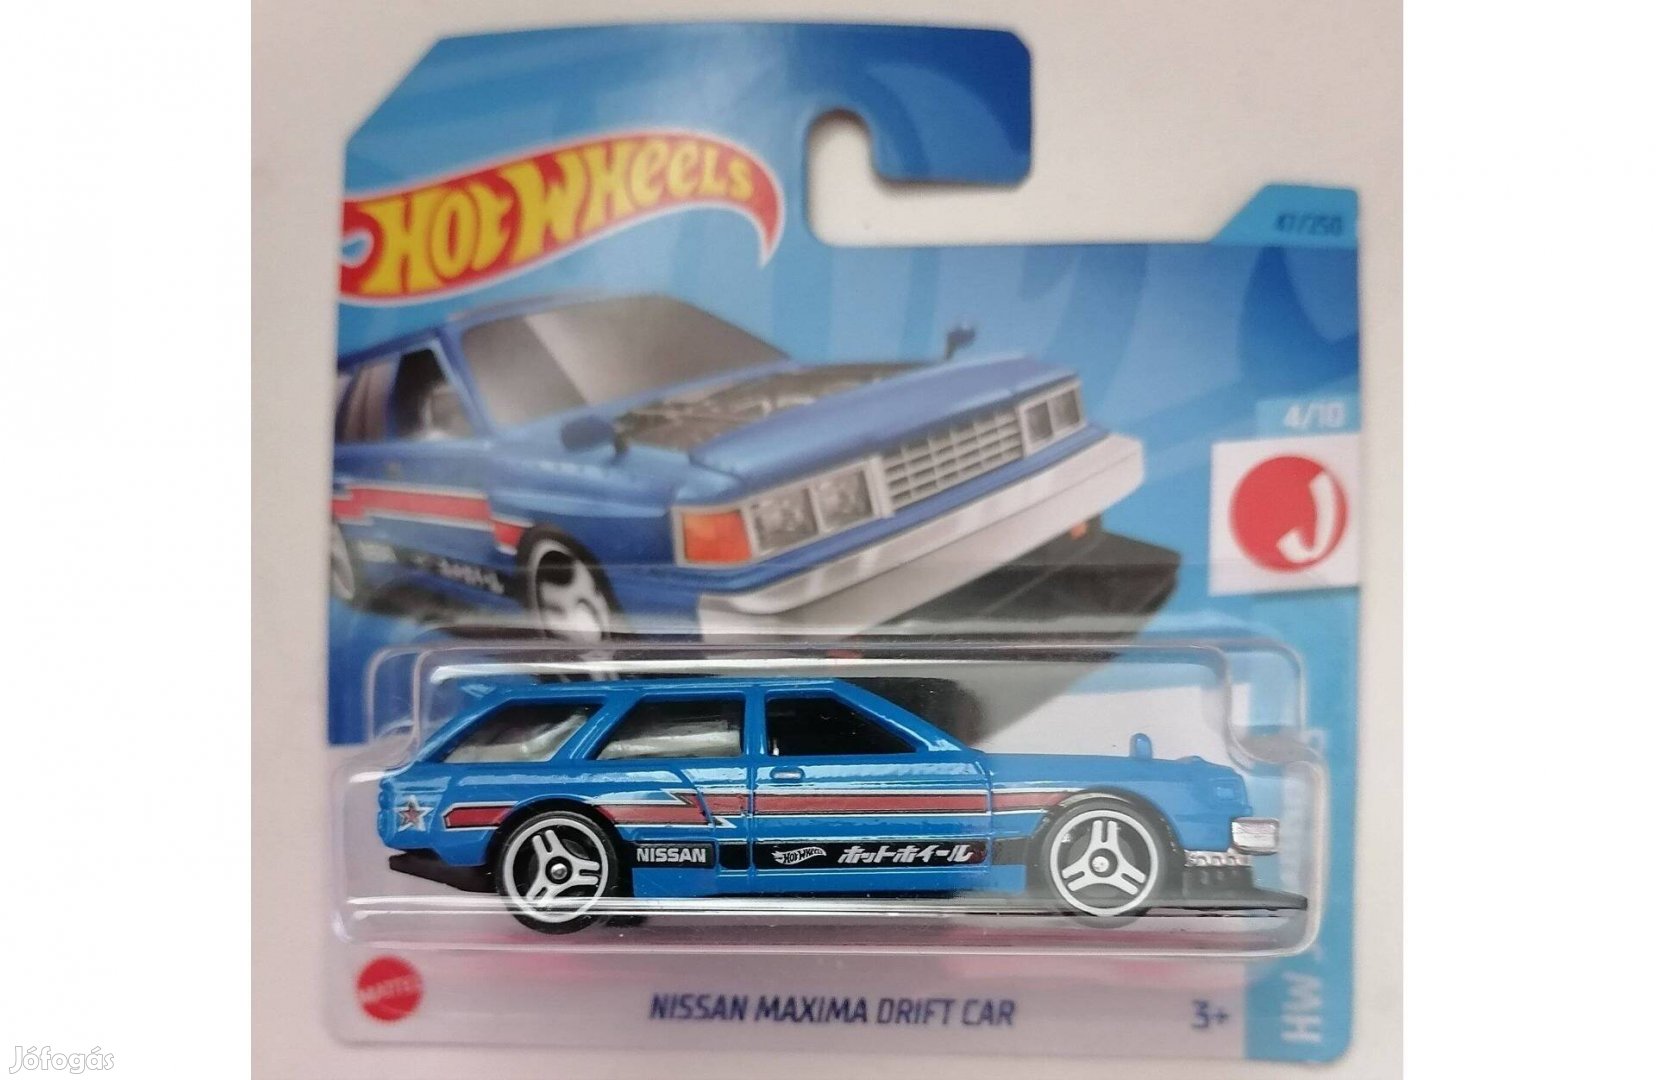 Hot Wheels Nissan Maxima Drift Car blue